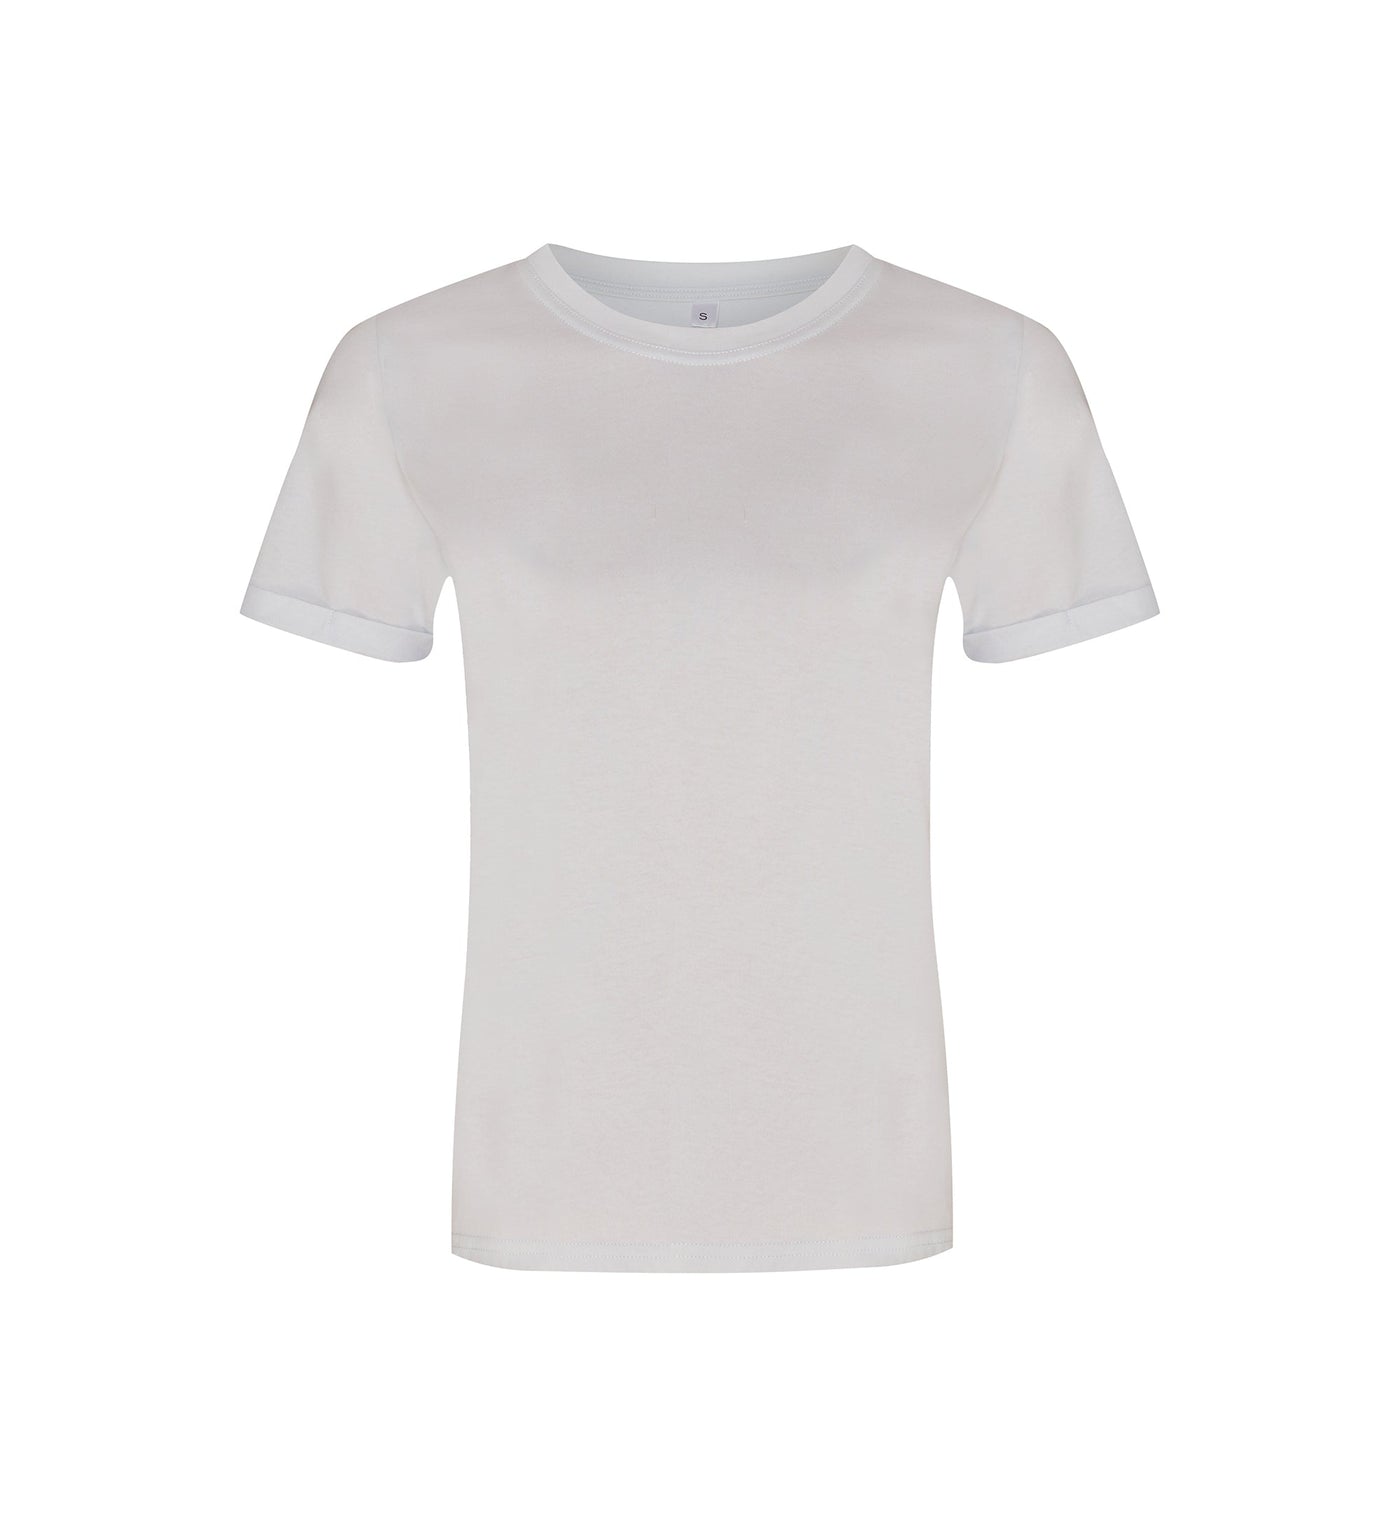 Glacier Grey T-Shirt